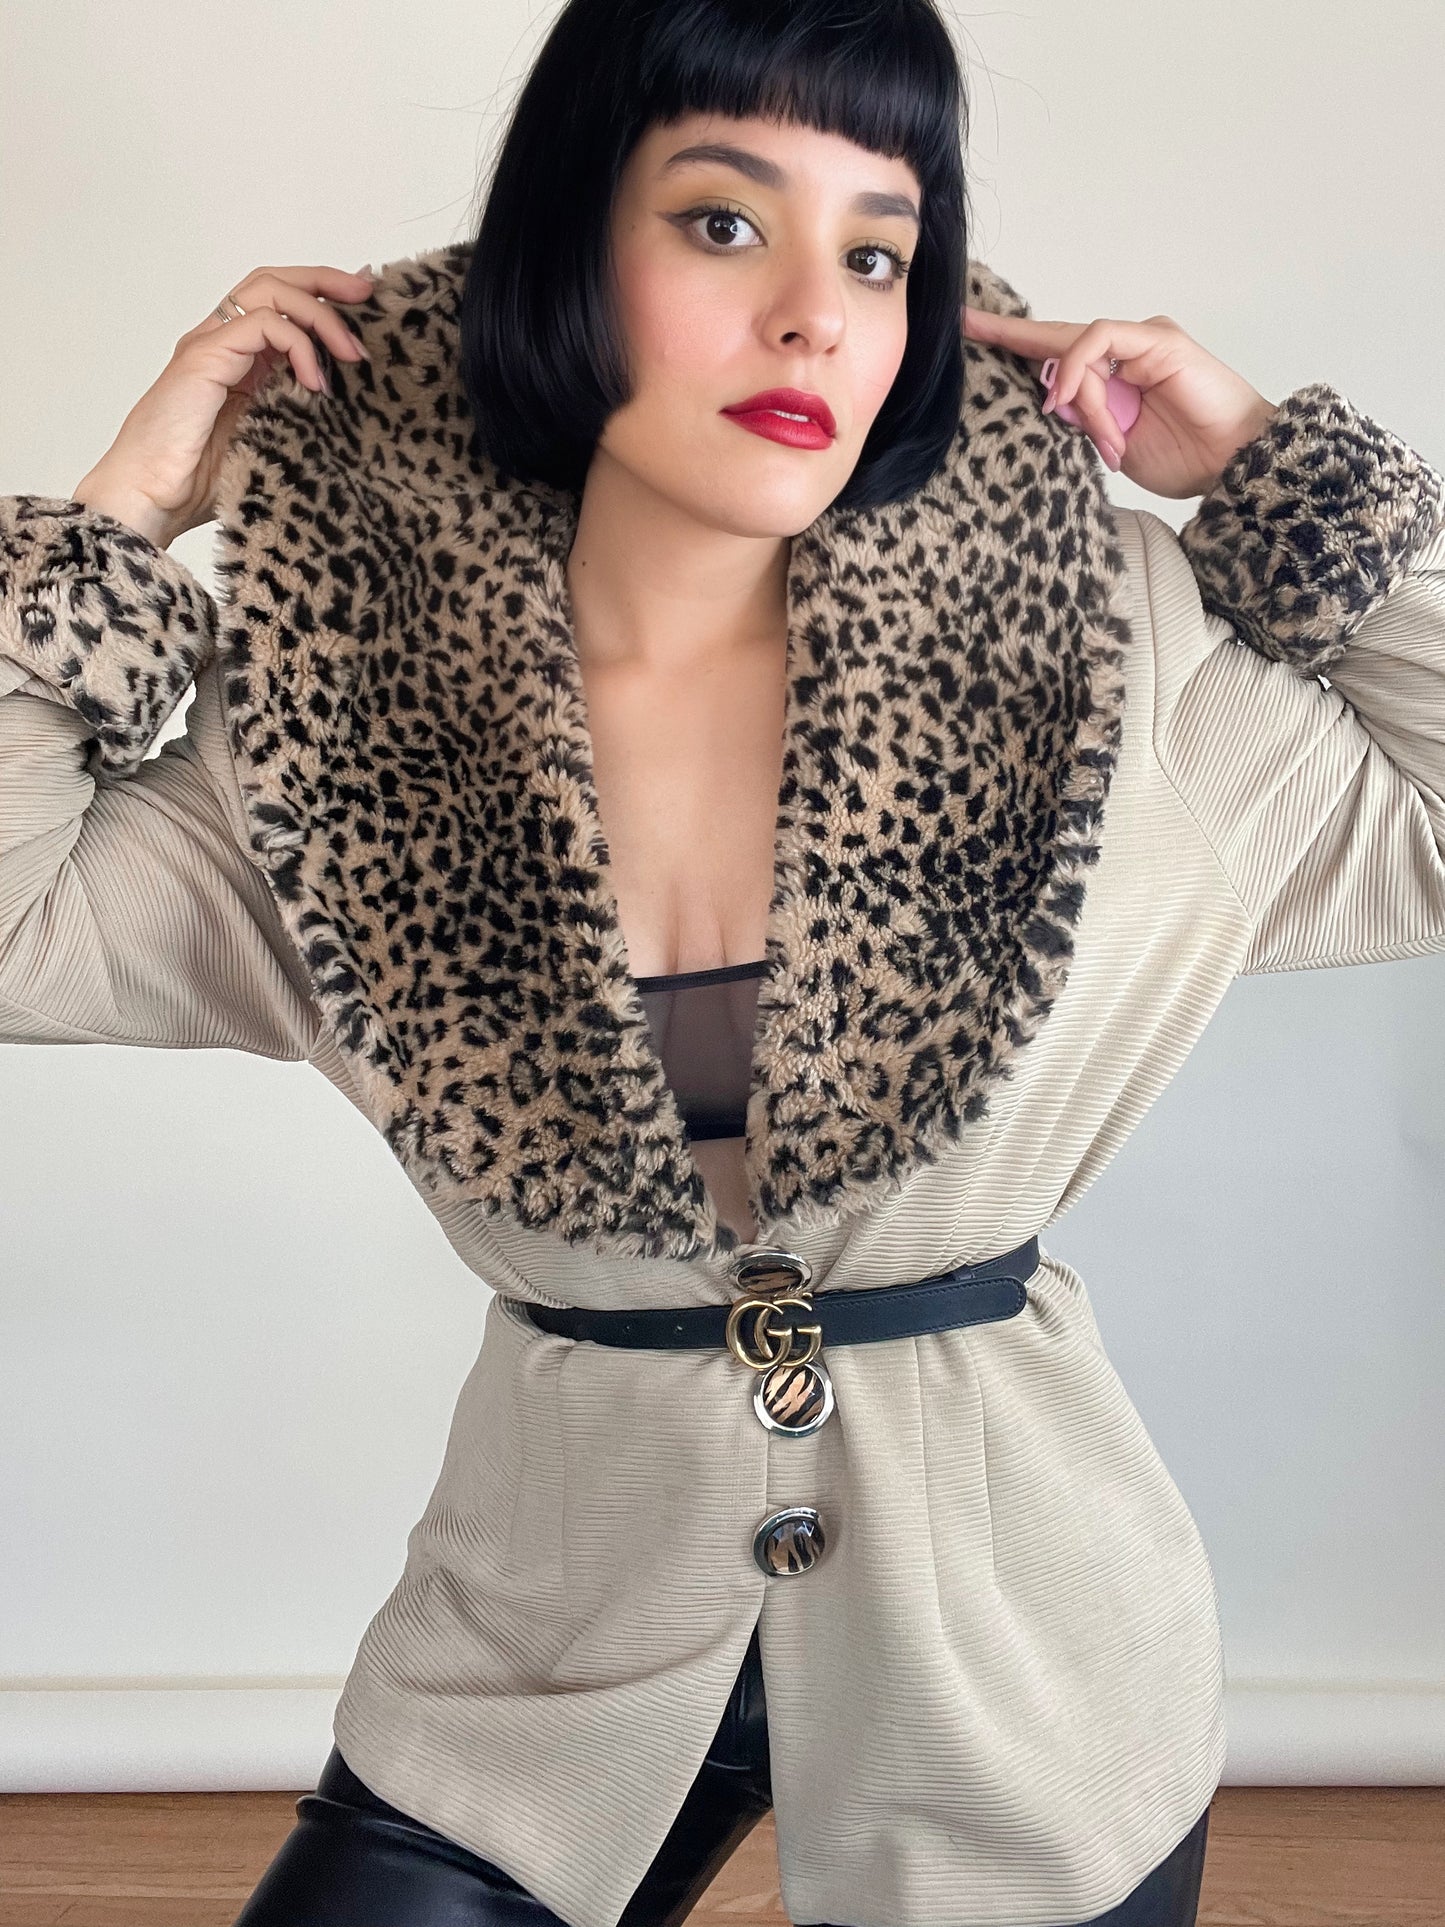 Vintage 80s Leopard Stretchy Blazer Jacket w/ Vegan Faux Animal Print Best Fits Sizes M-L